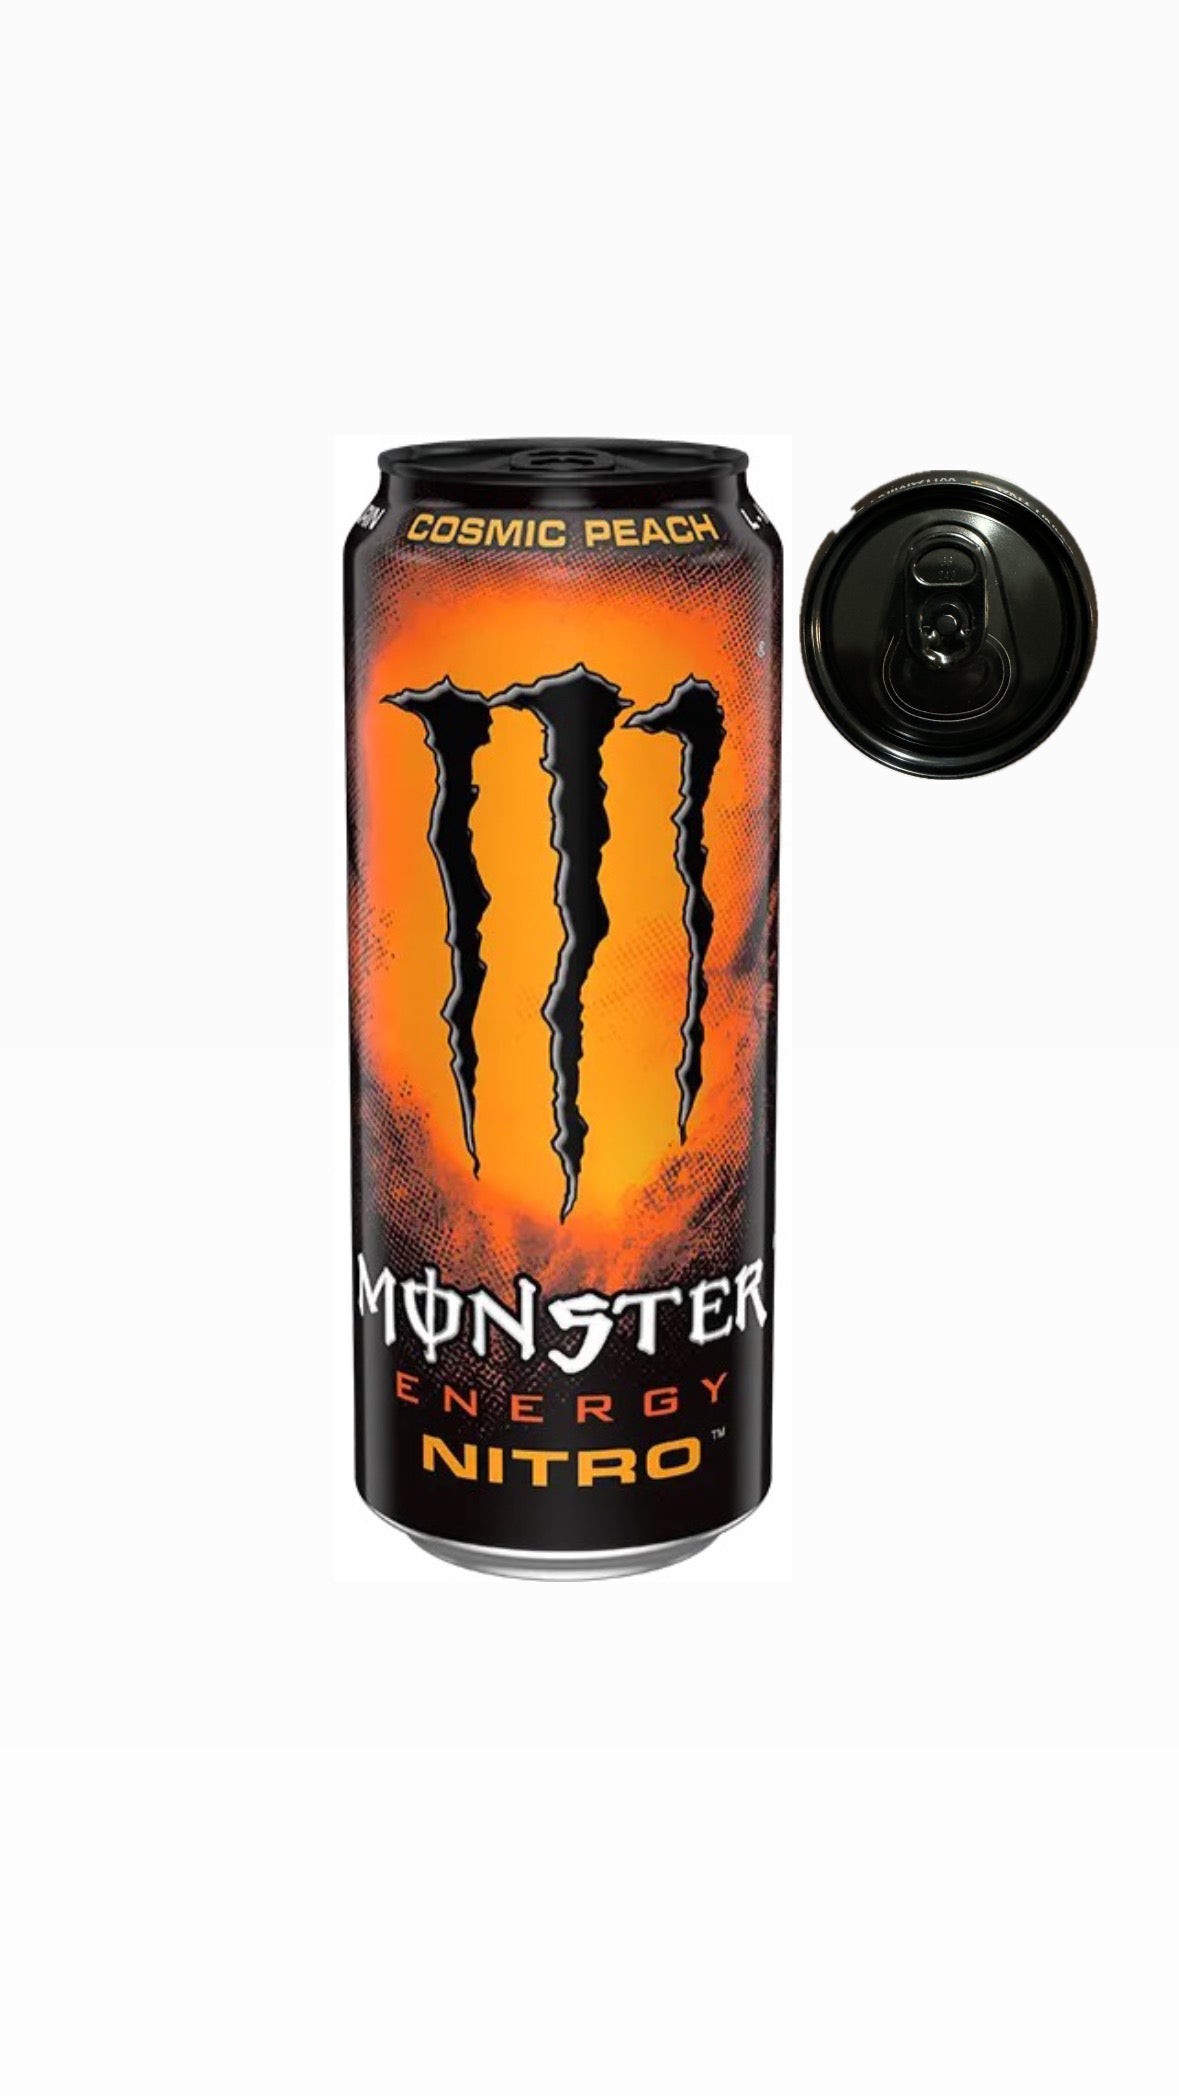 Monster Energy Nitro Cosmic Peach PL 500ml sku: 0123 ( lattine con ammaccature )